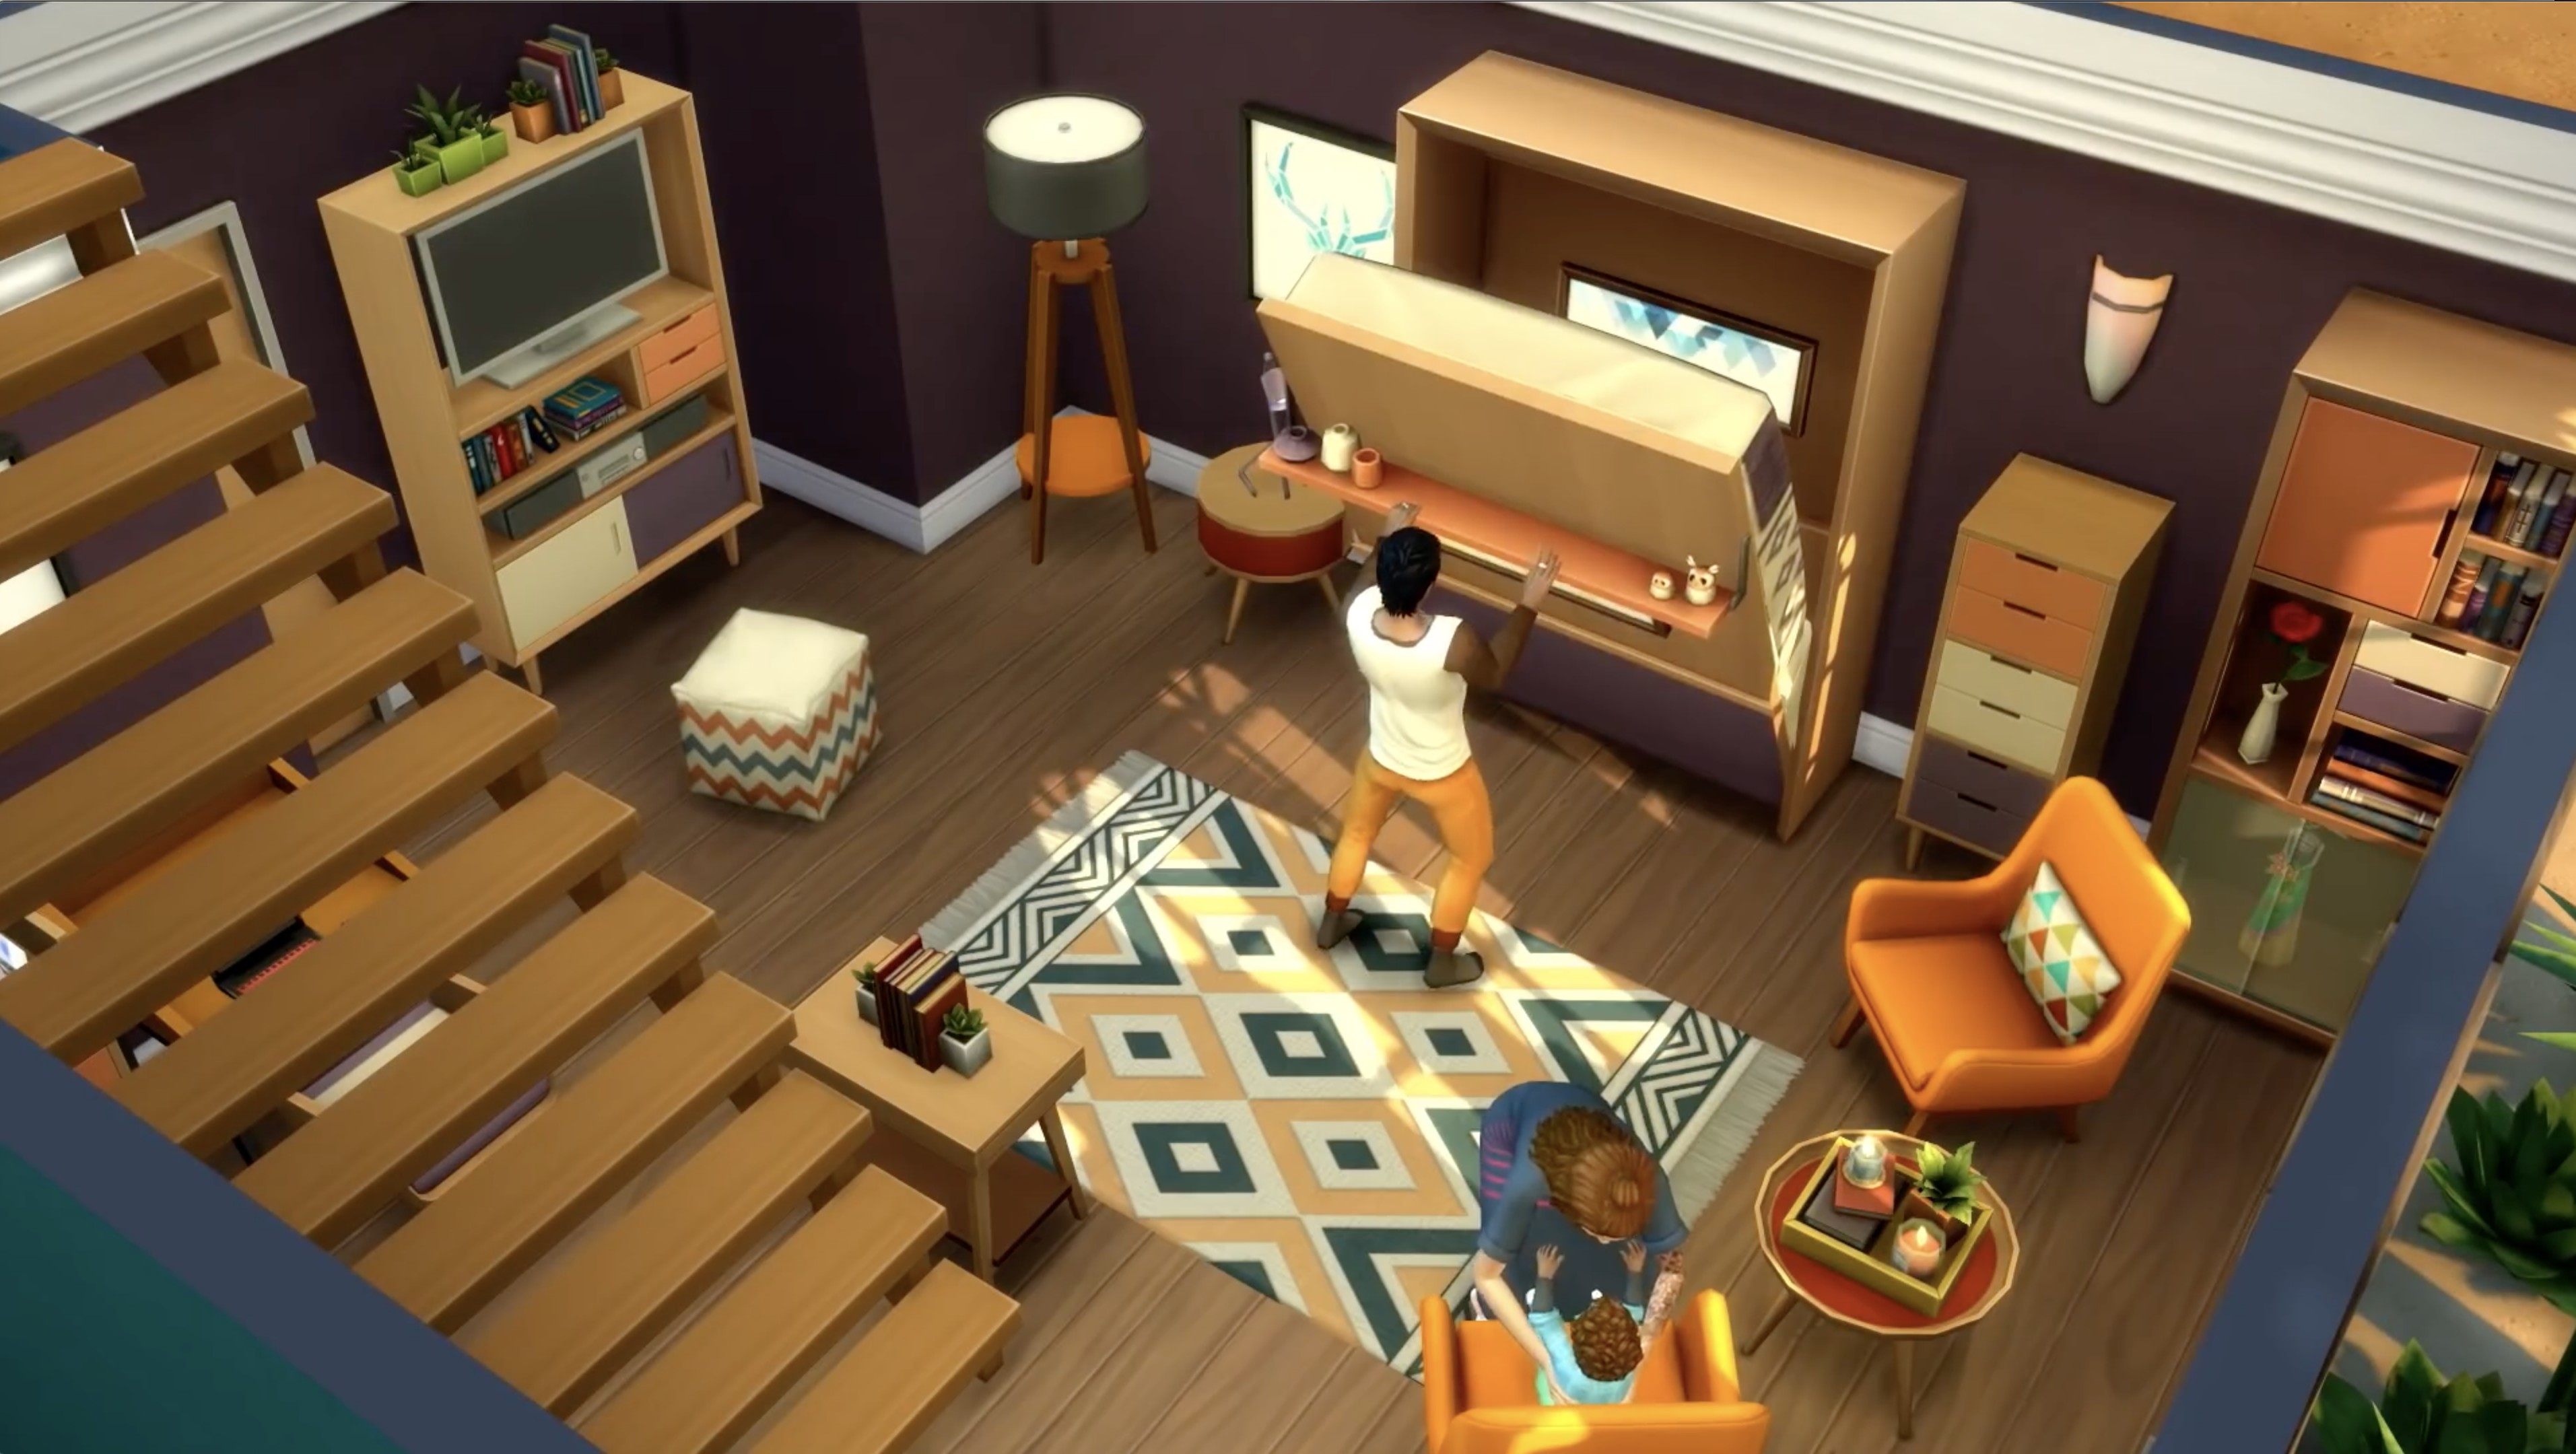 The Sims 4 Tiny Living Stuff Pack Mac, Windows [Digital] DIGITAL